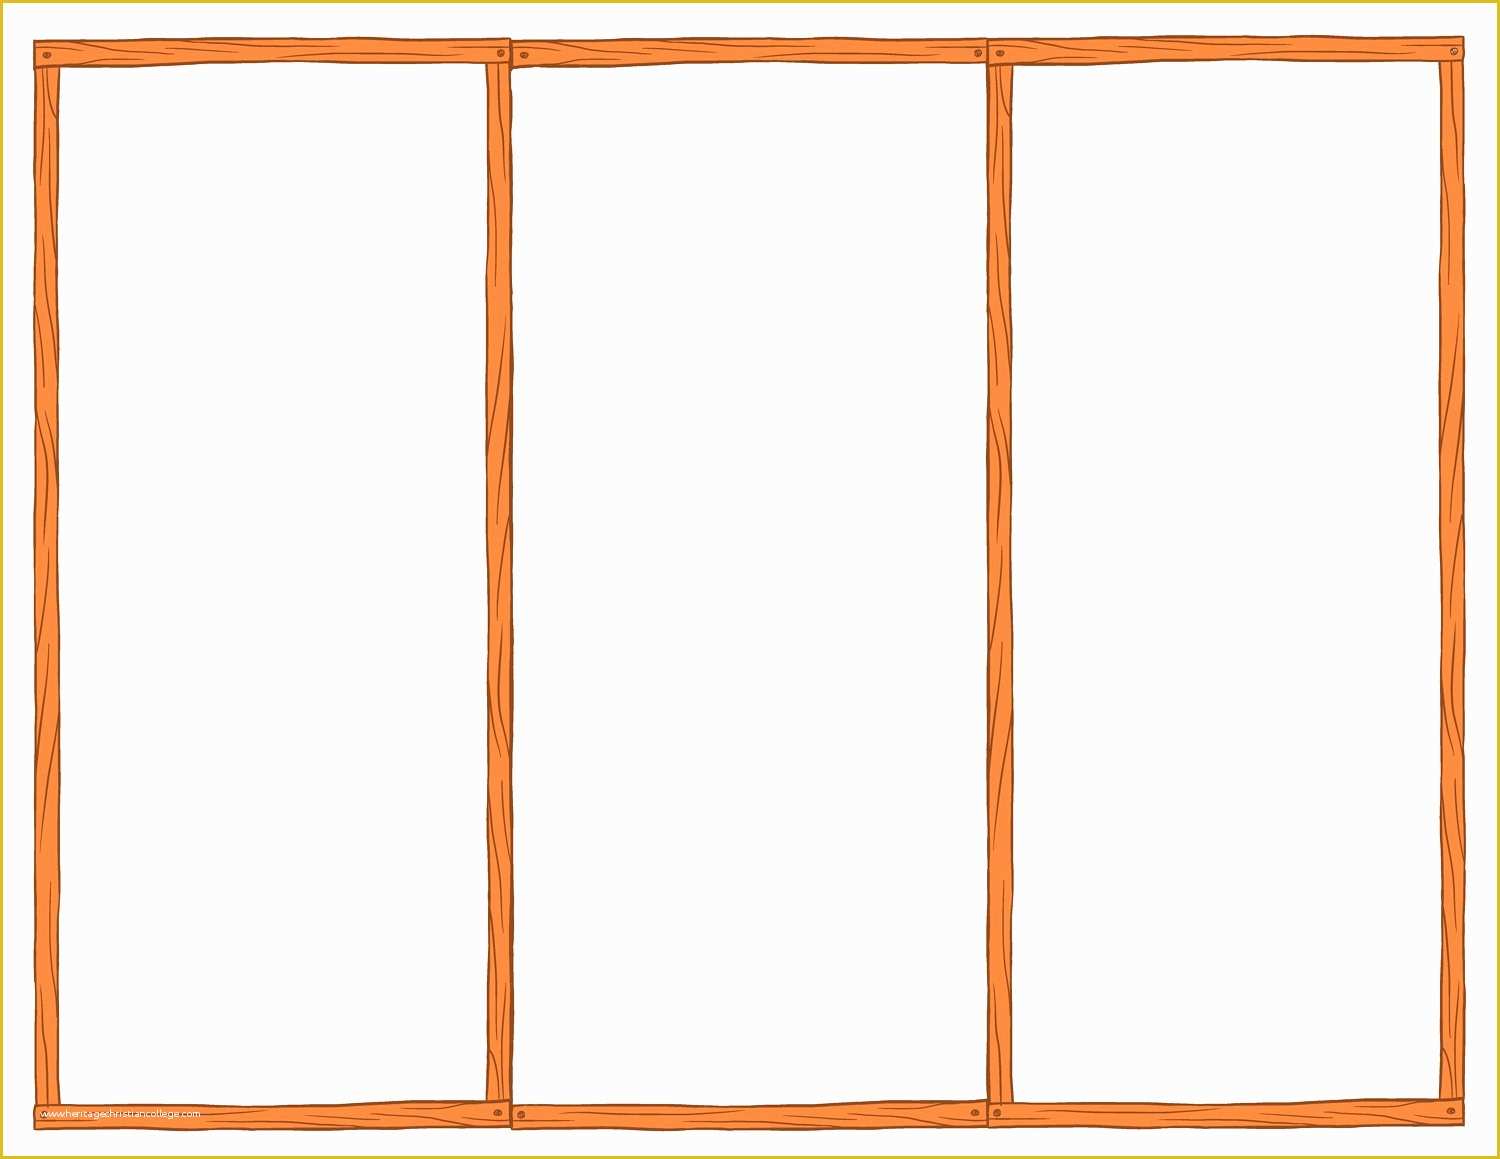 Tri Fold Brochure Template Free Of Blank Tri Fold Brochure Template Example Mughals